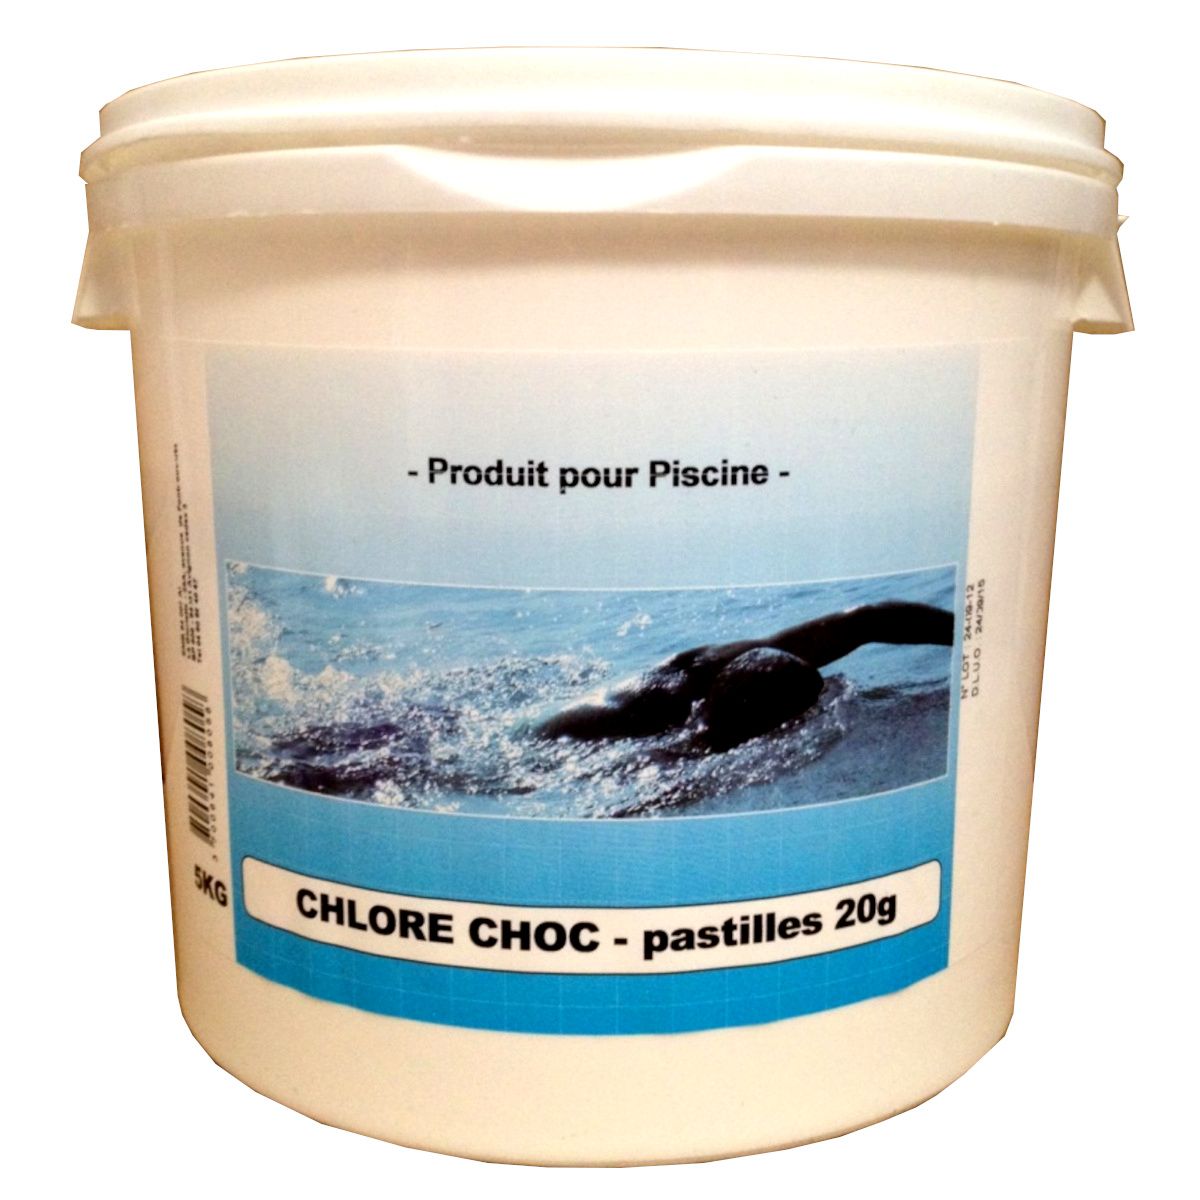 Nmp Chlore choc pastille 5kg - 35025g